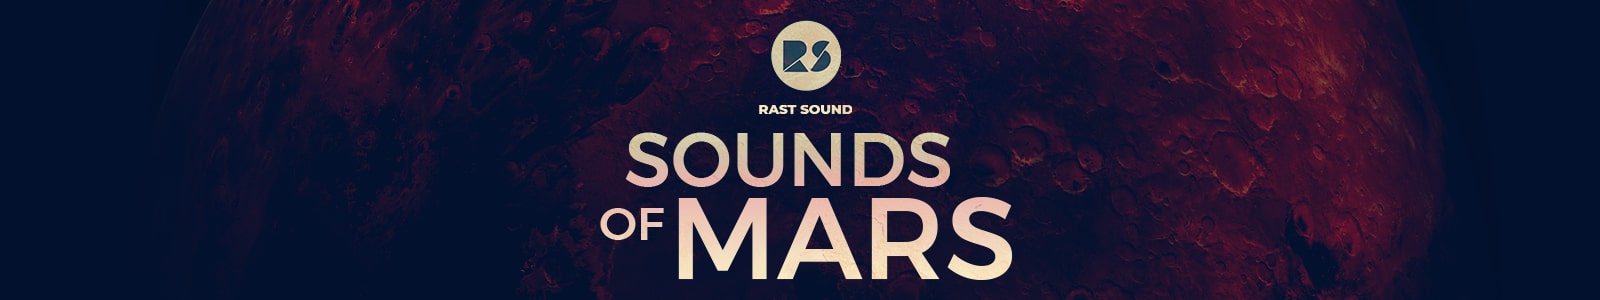 sounds of mars by rast sound